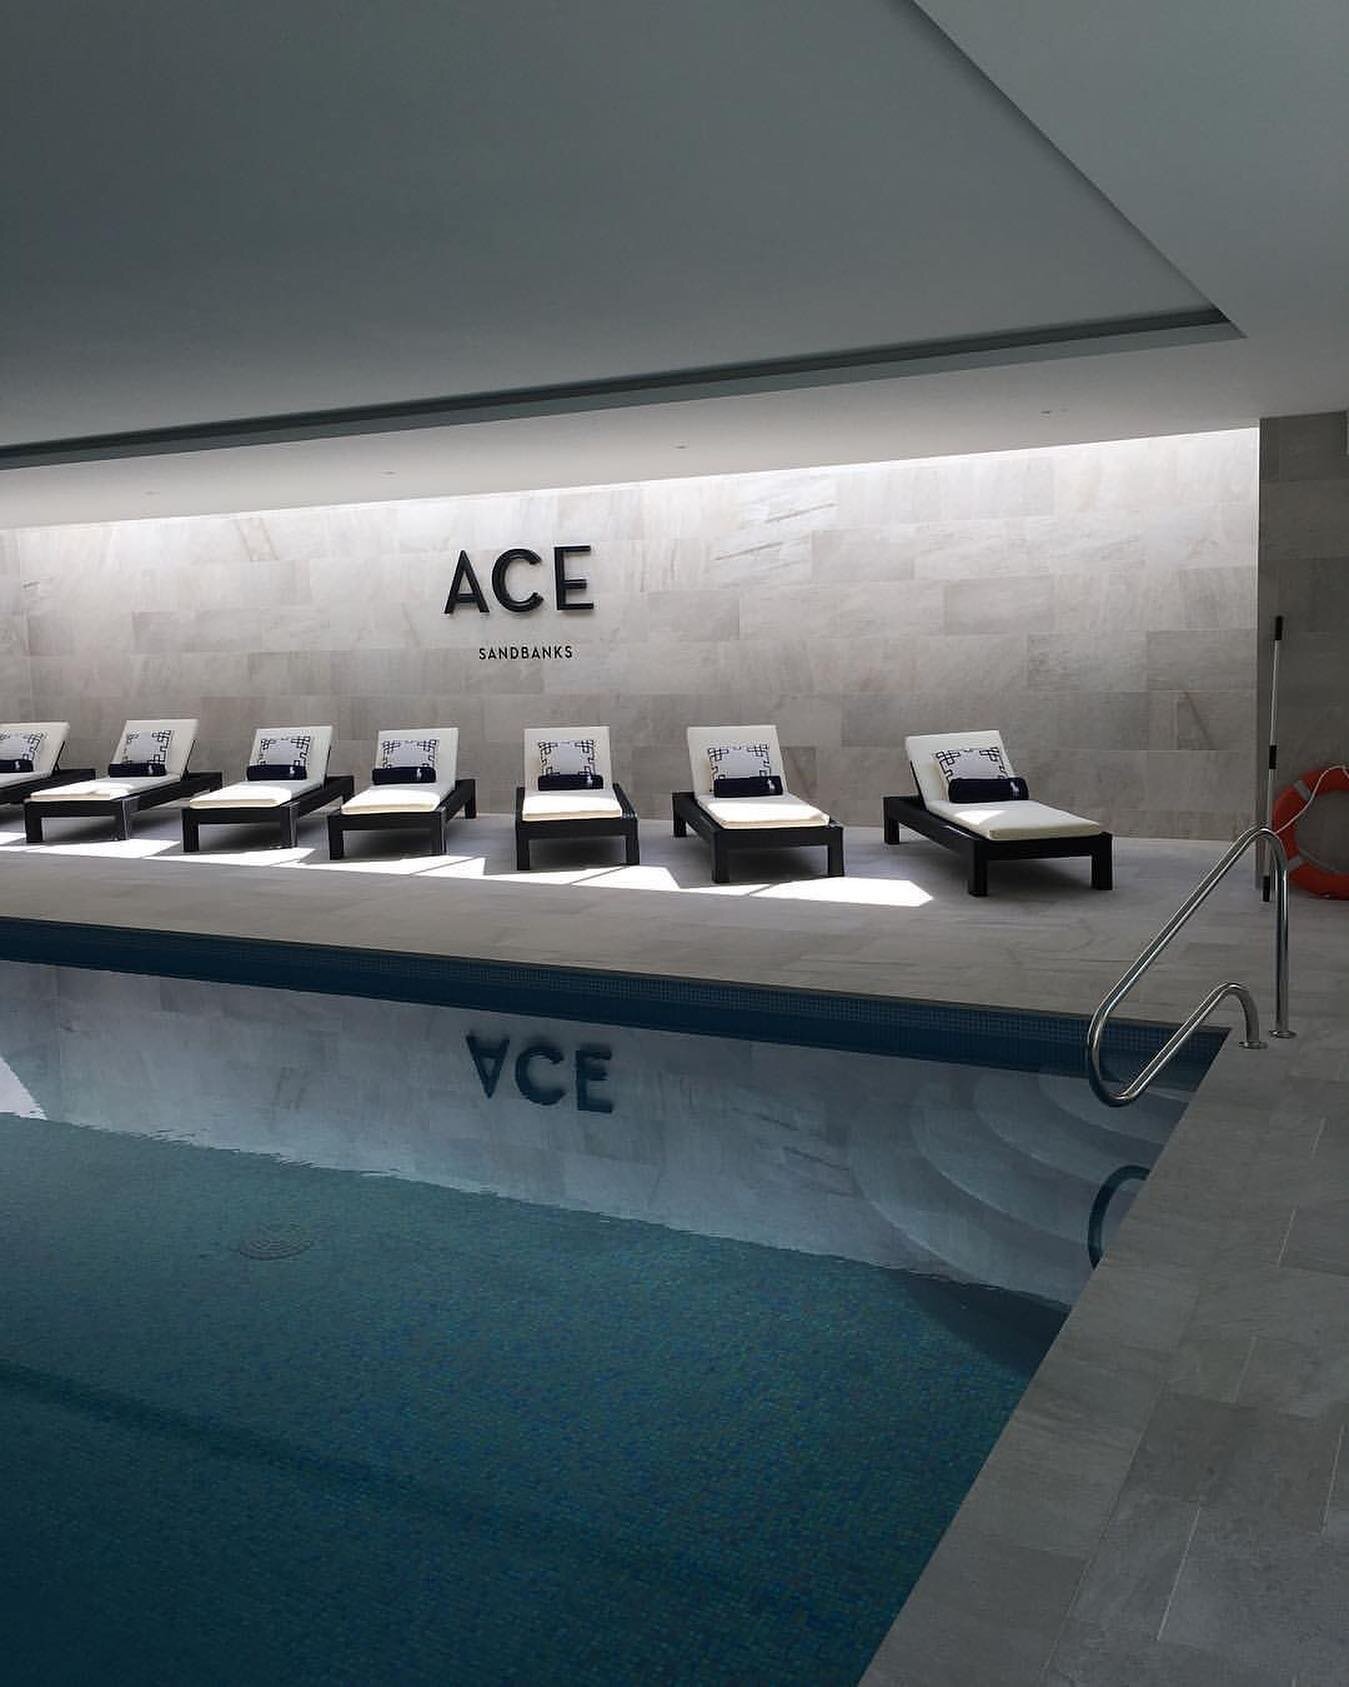 Ace apartments swimming pool tiled by @johnbocchetta_tiling 
.
.
.
.
.
.
.
#tiles #design #living #aparments #flats #swimming #swimmingpool #sandbanks #poole #dorset #bourenmouth #pool #luxurylifestyle #luxuryliving #luxury #luxuryhomes #homedecor #h